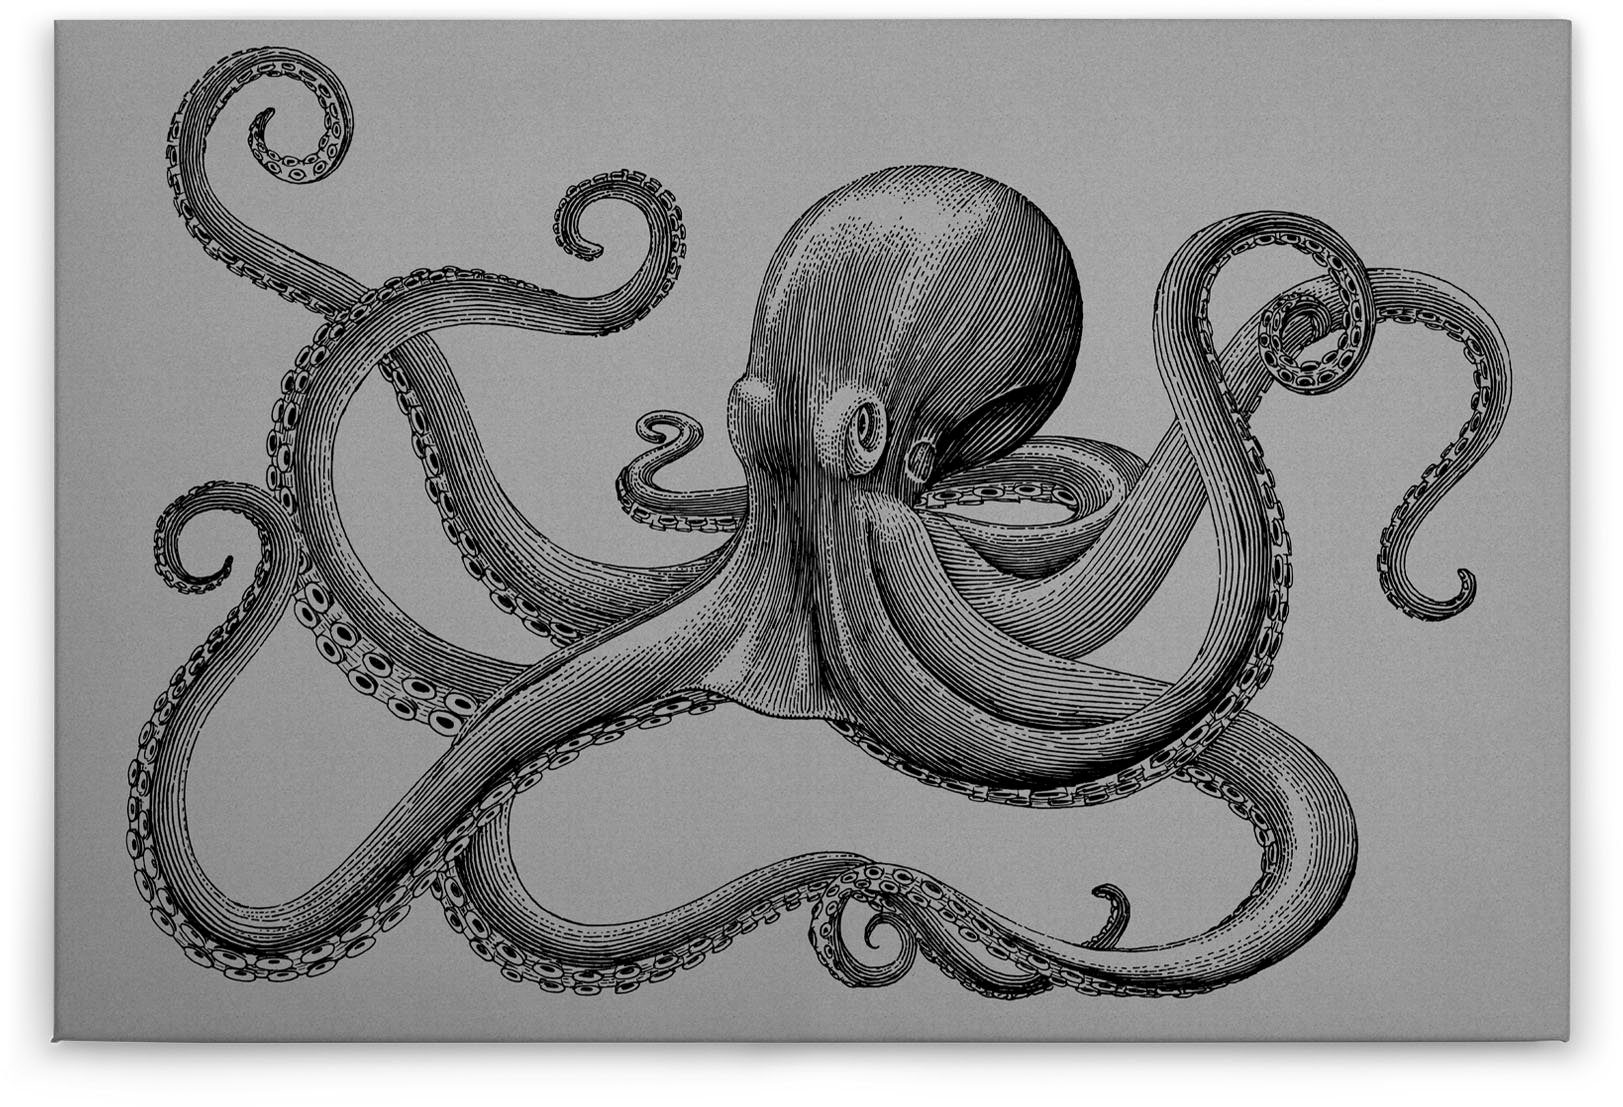 A.S. Création Leinwandbild schwarz Bild Krake Octopus Keilrahmen grau, St), (1 Tiere jules